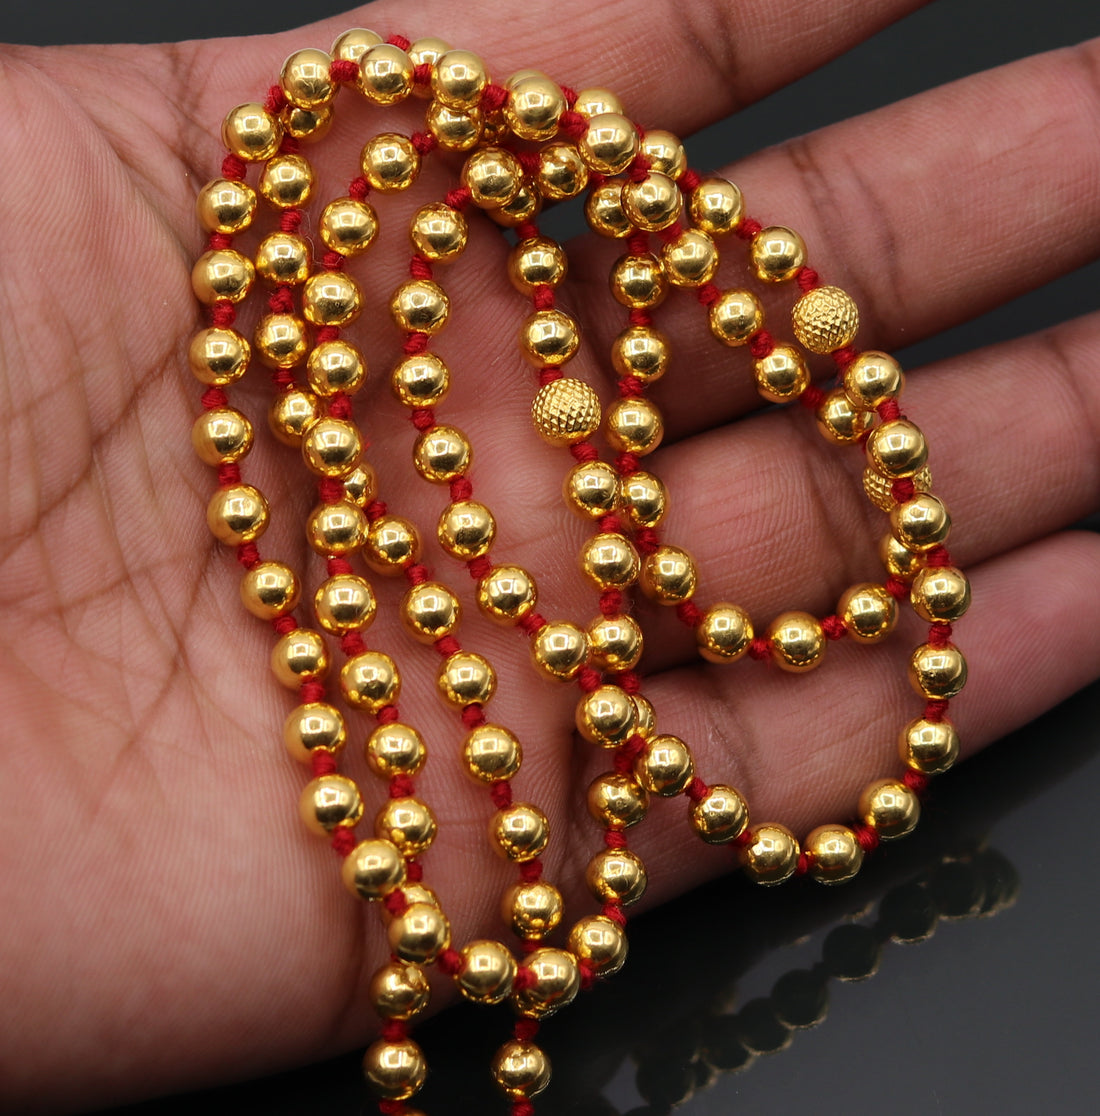 20 karat yellow gold handmade fabulous 108 beads japp mala with guru and market beads japp mala,excellent japping mantra meditation necklace - TRIBAL ORNAMENTS